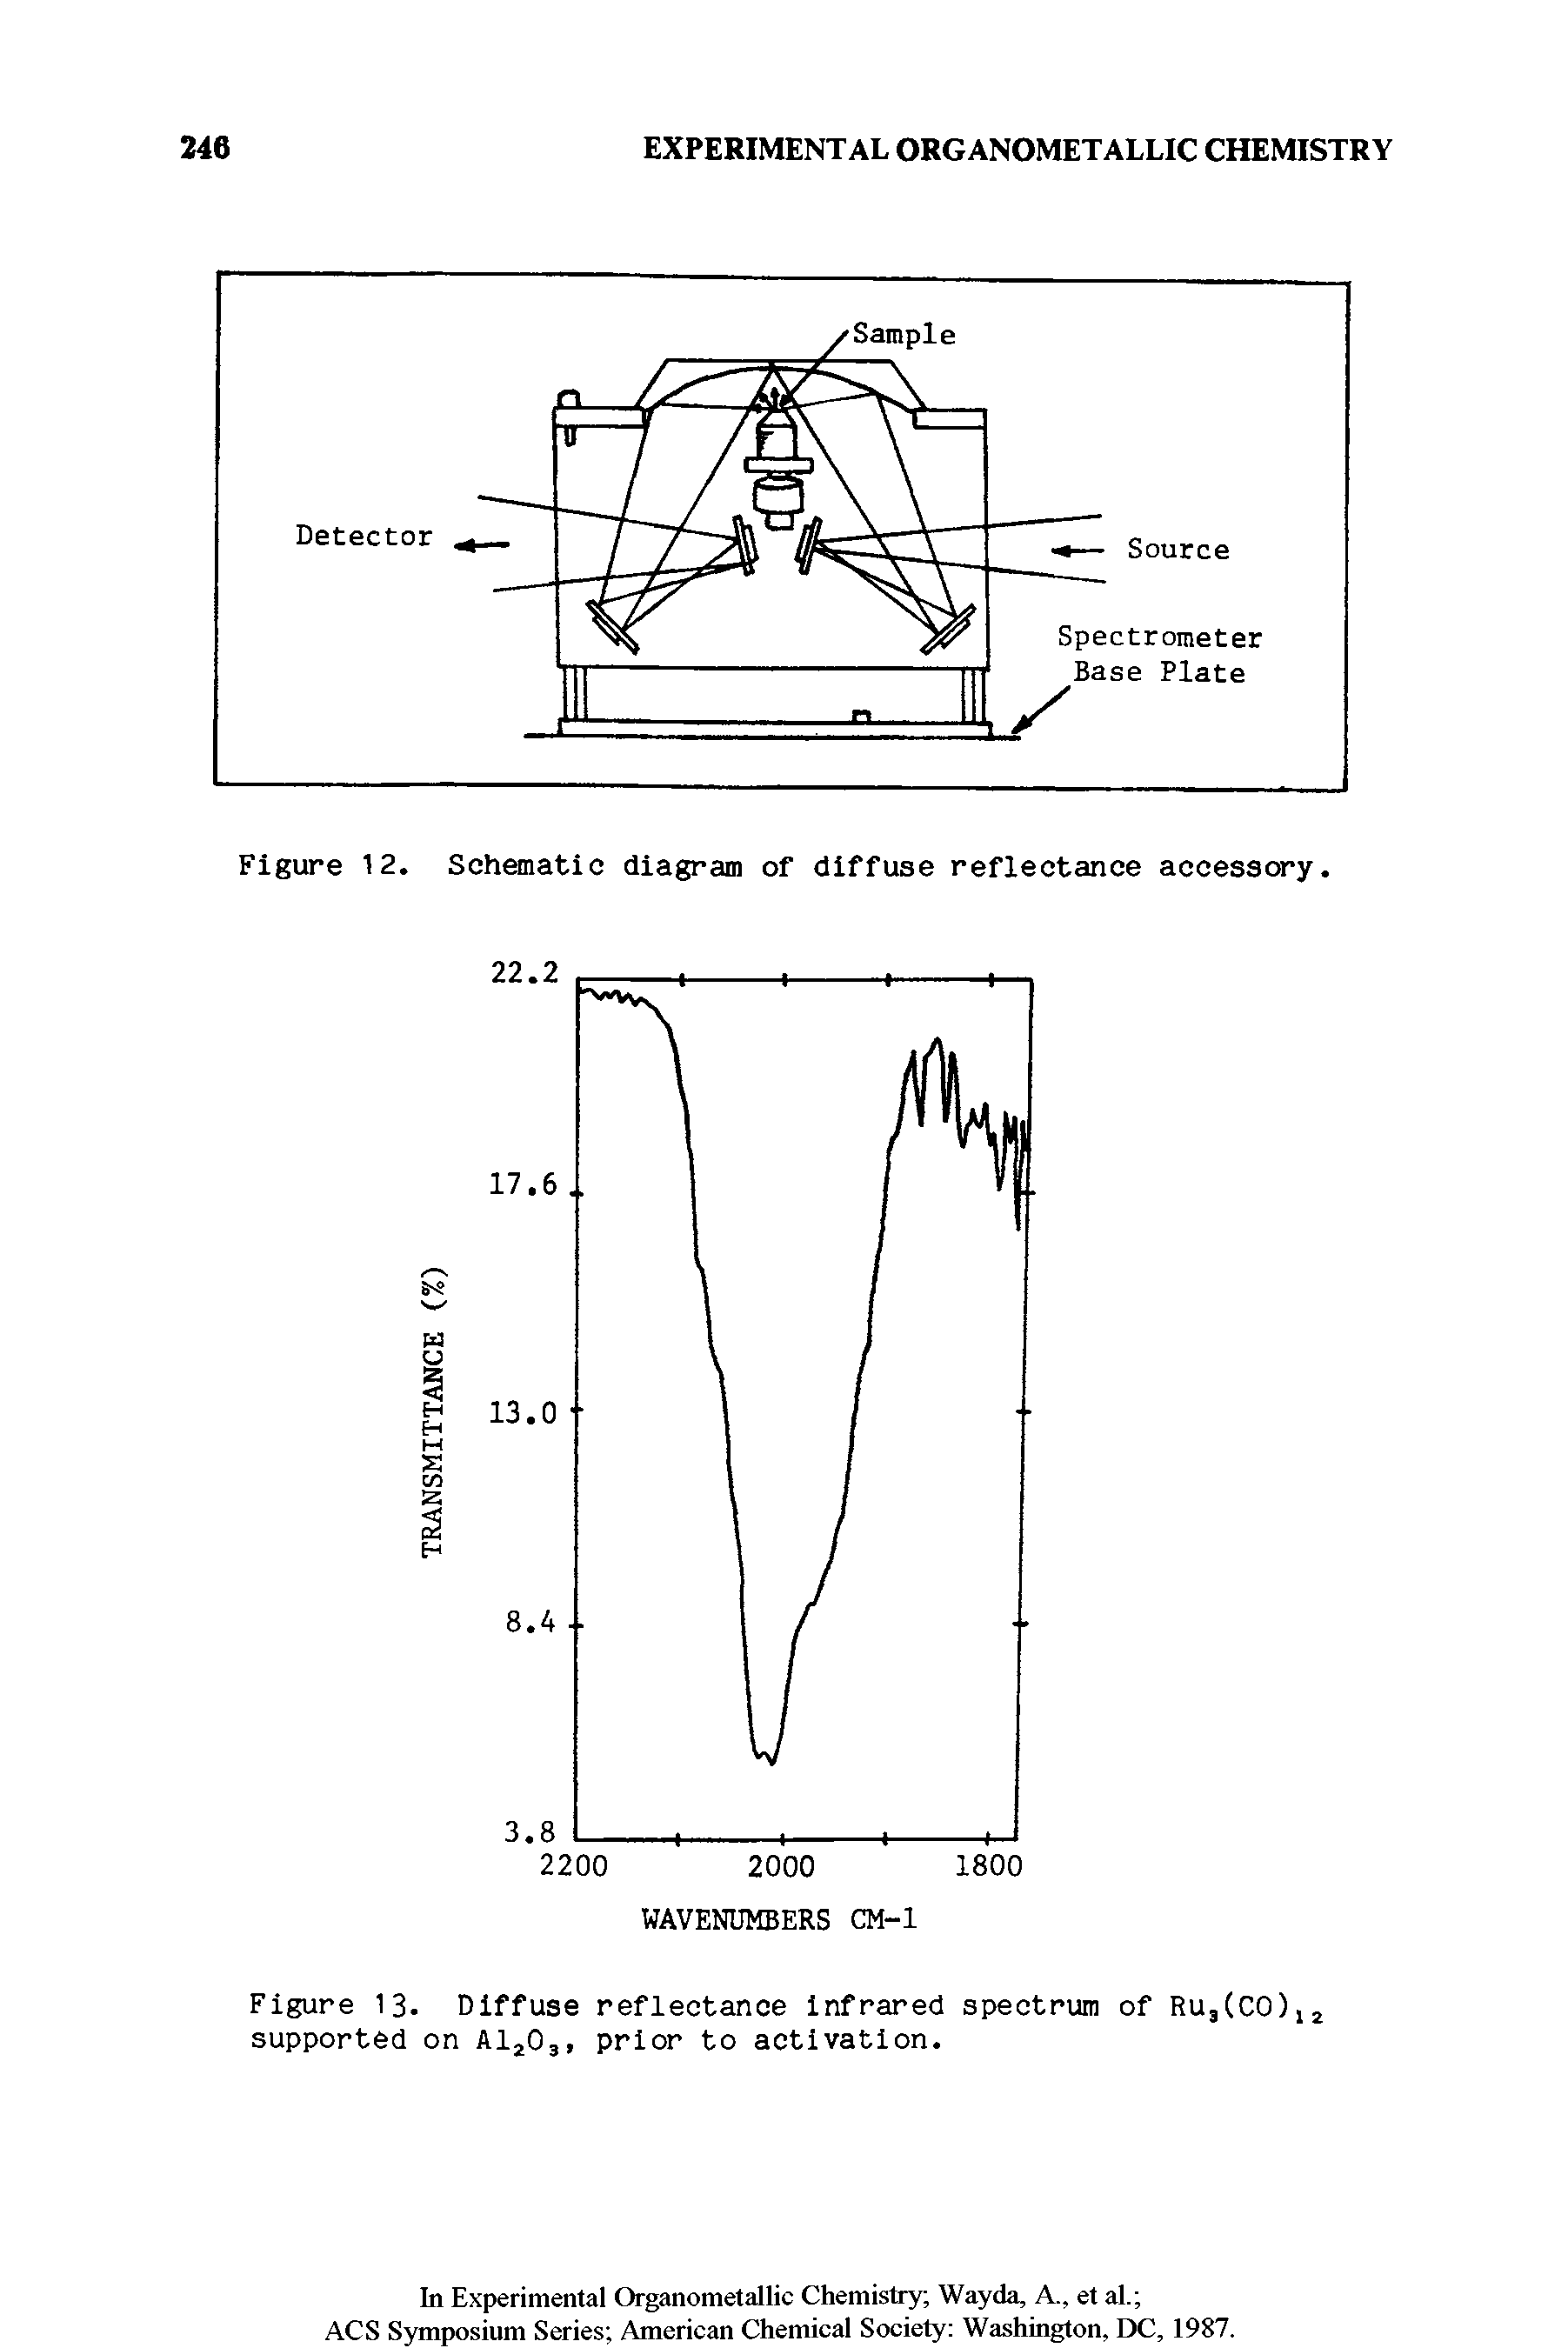 Figure 12. Schematic diagram of diffuse reflectance accessory.